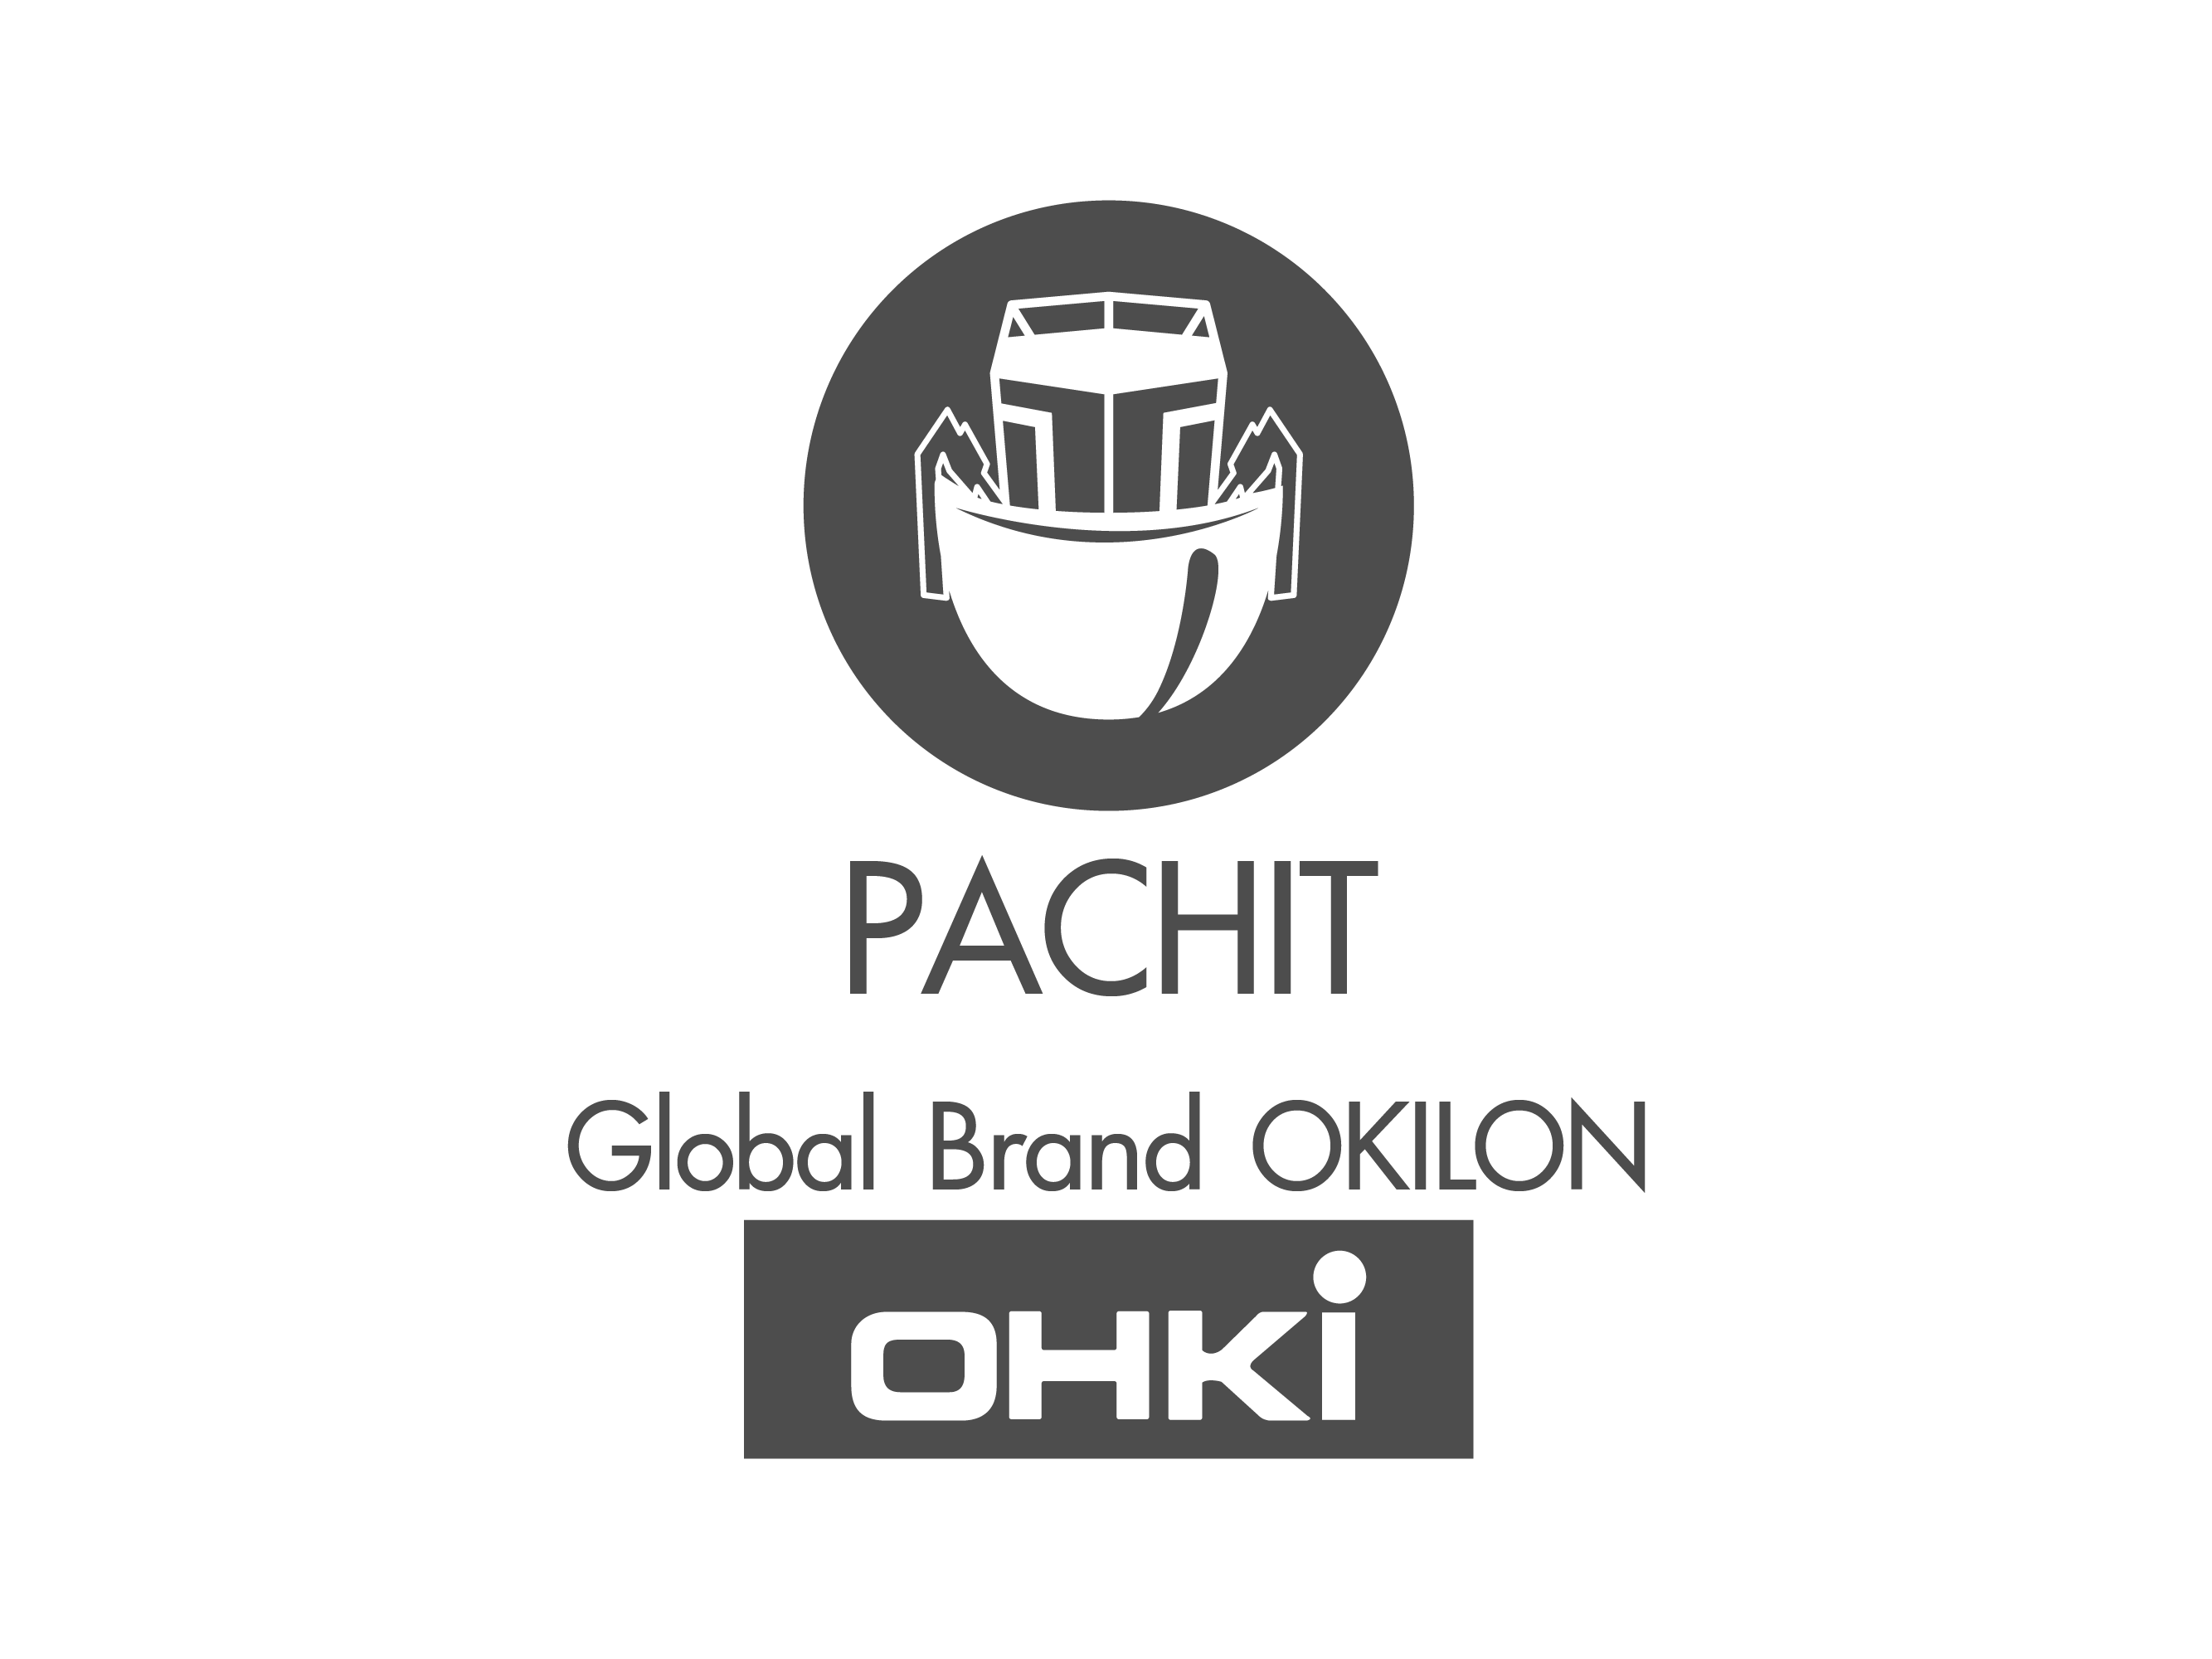  Pachit Ohki